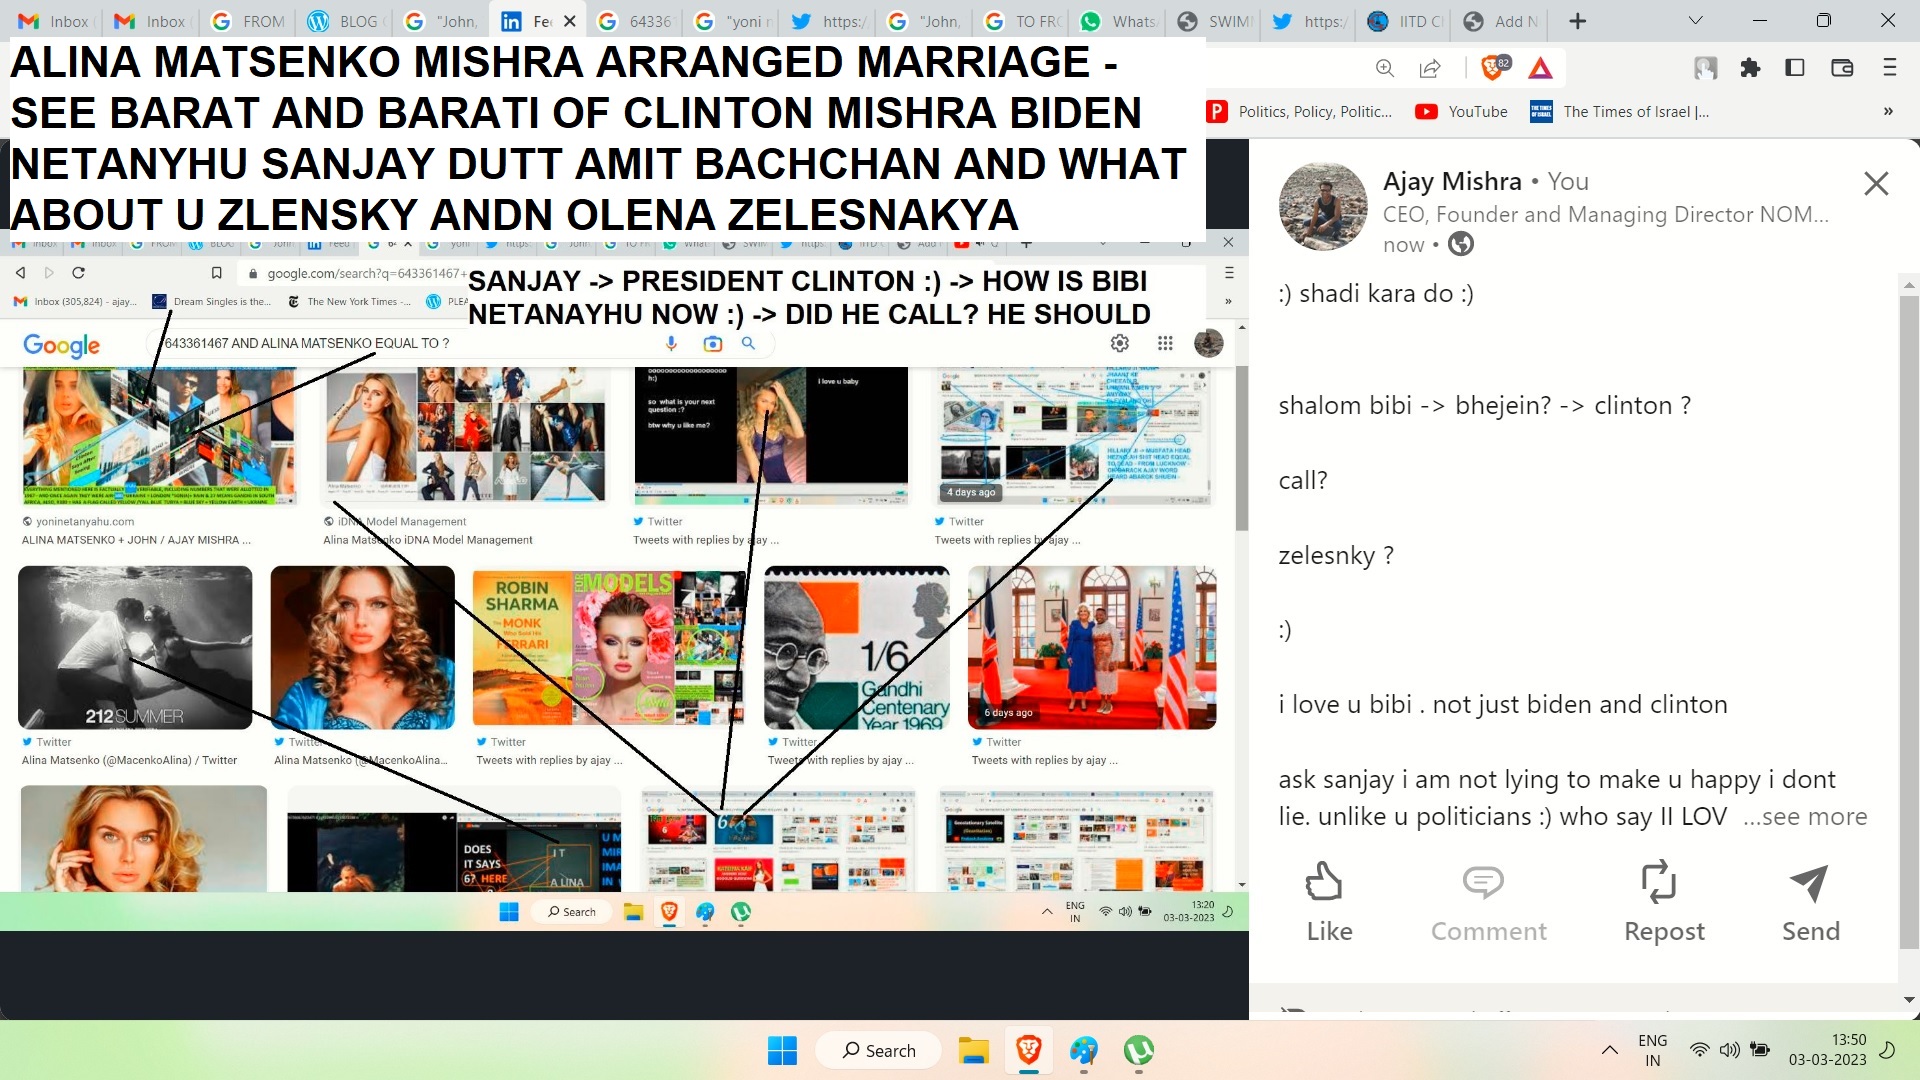 ALINA MATSENKO MIISHRA ARRANGED MARRIAGE - SE BARAT AND BARATI OF CLINTON MISHRA BIDEN NETANYHU SANJAY DUTT AMITBAH BAHCHAN AND WHAT ABOUT U ZLENESKY ANDN OLENA ZELESNAKYA